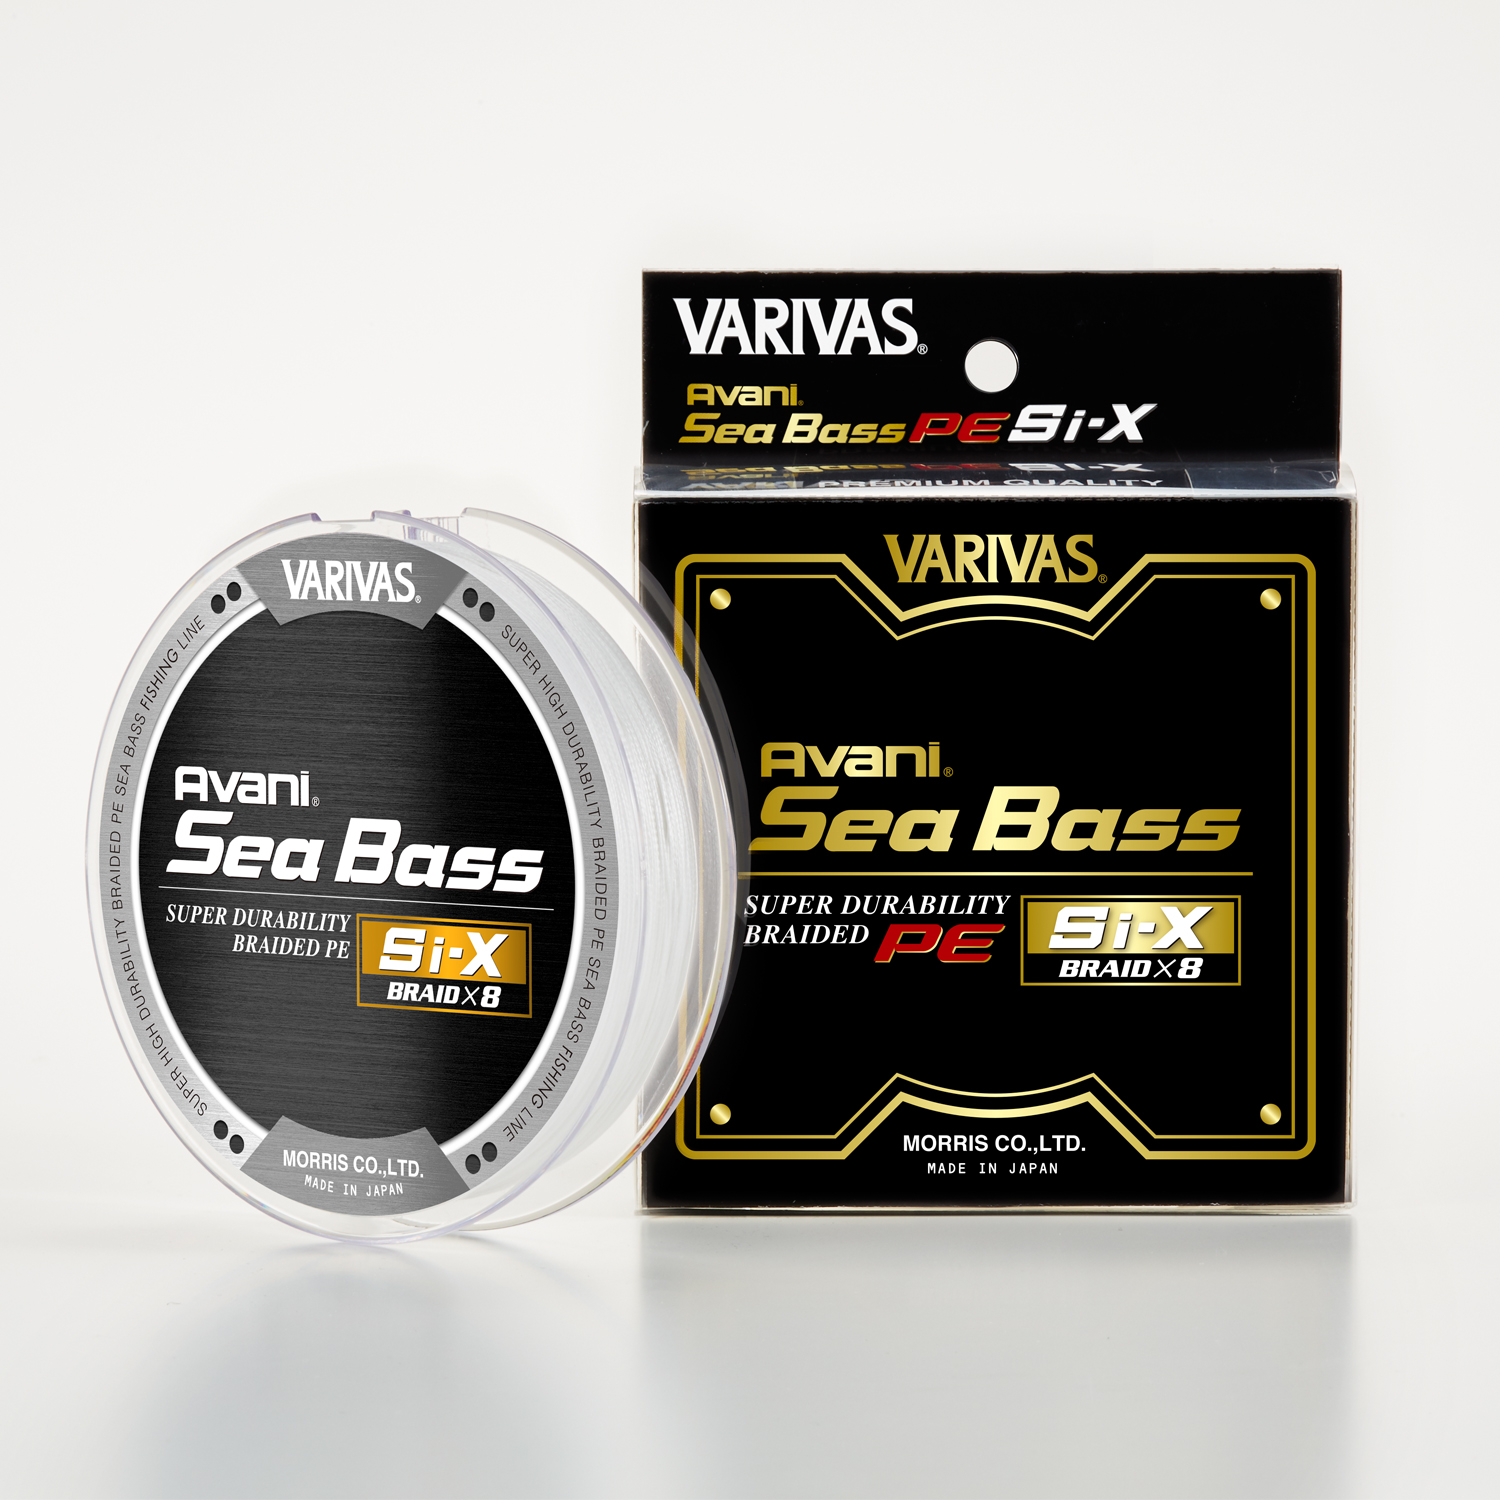 Varivas Avani Sea Bass Si-X Braid - Veals Mail Order